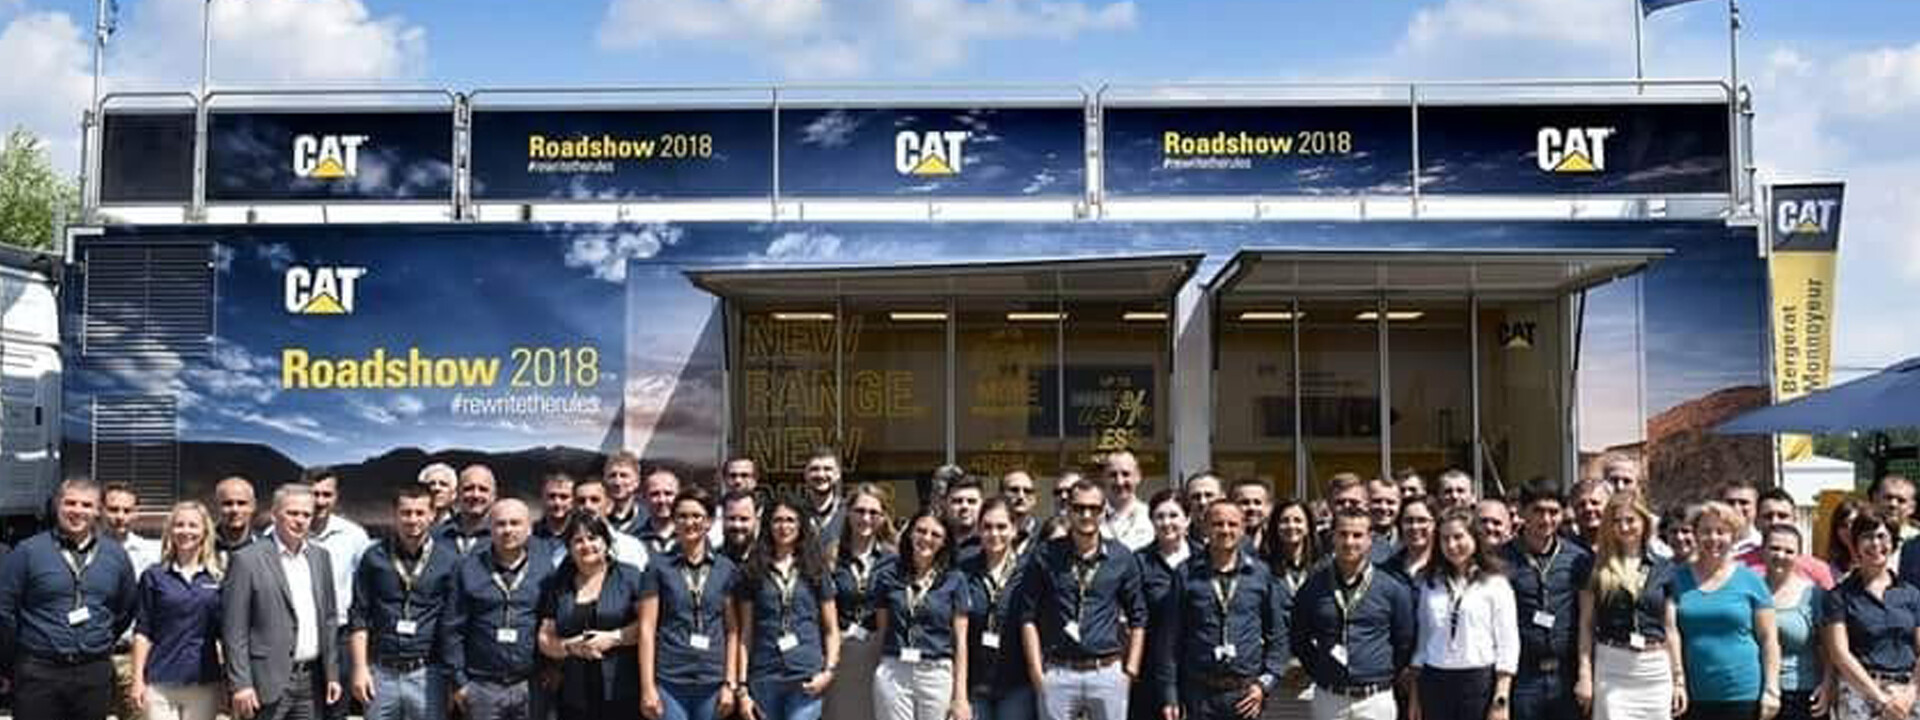 Caterpillar Roadshow Team